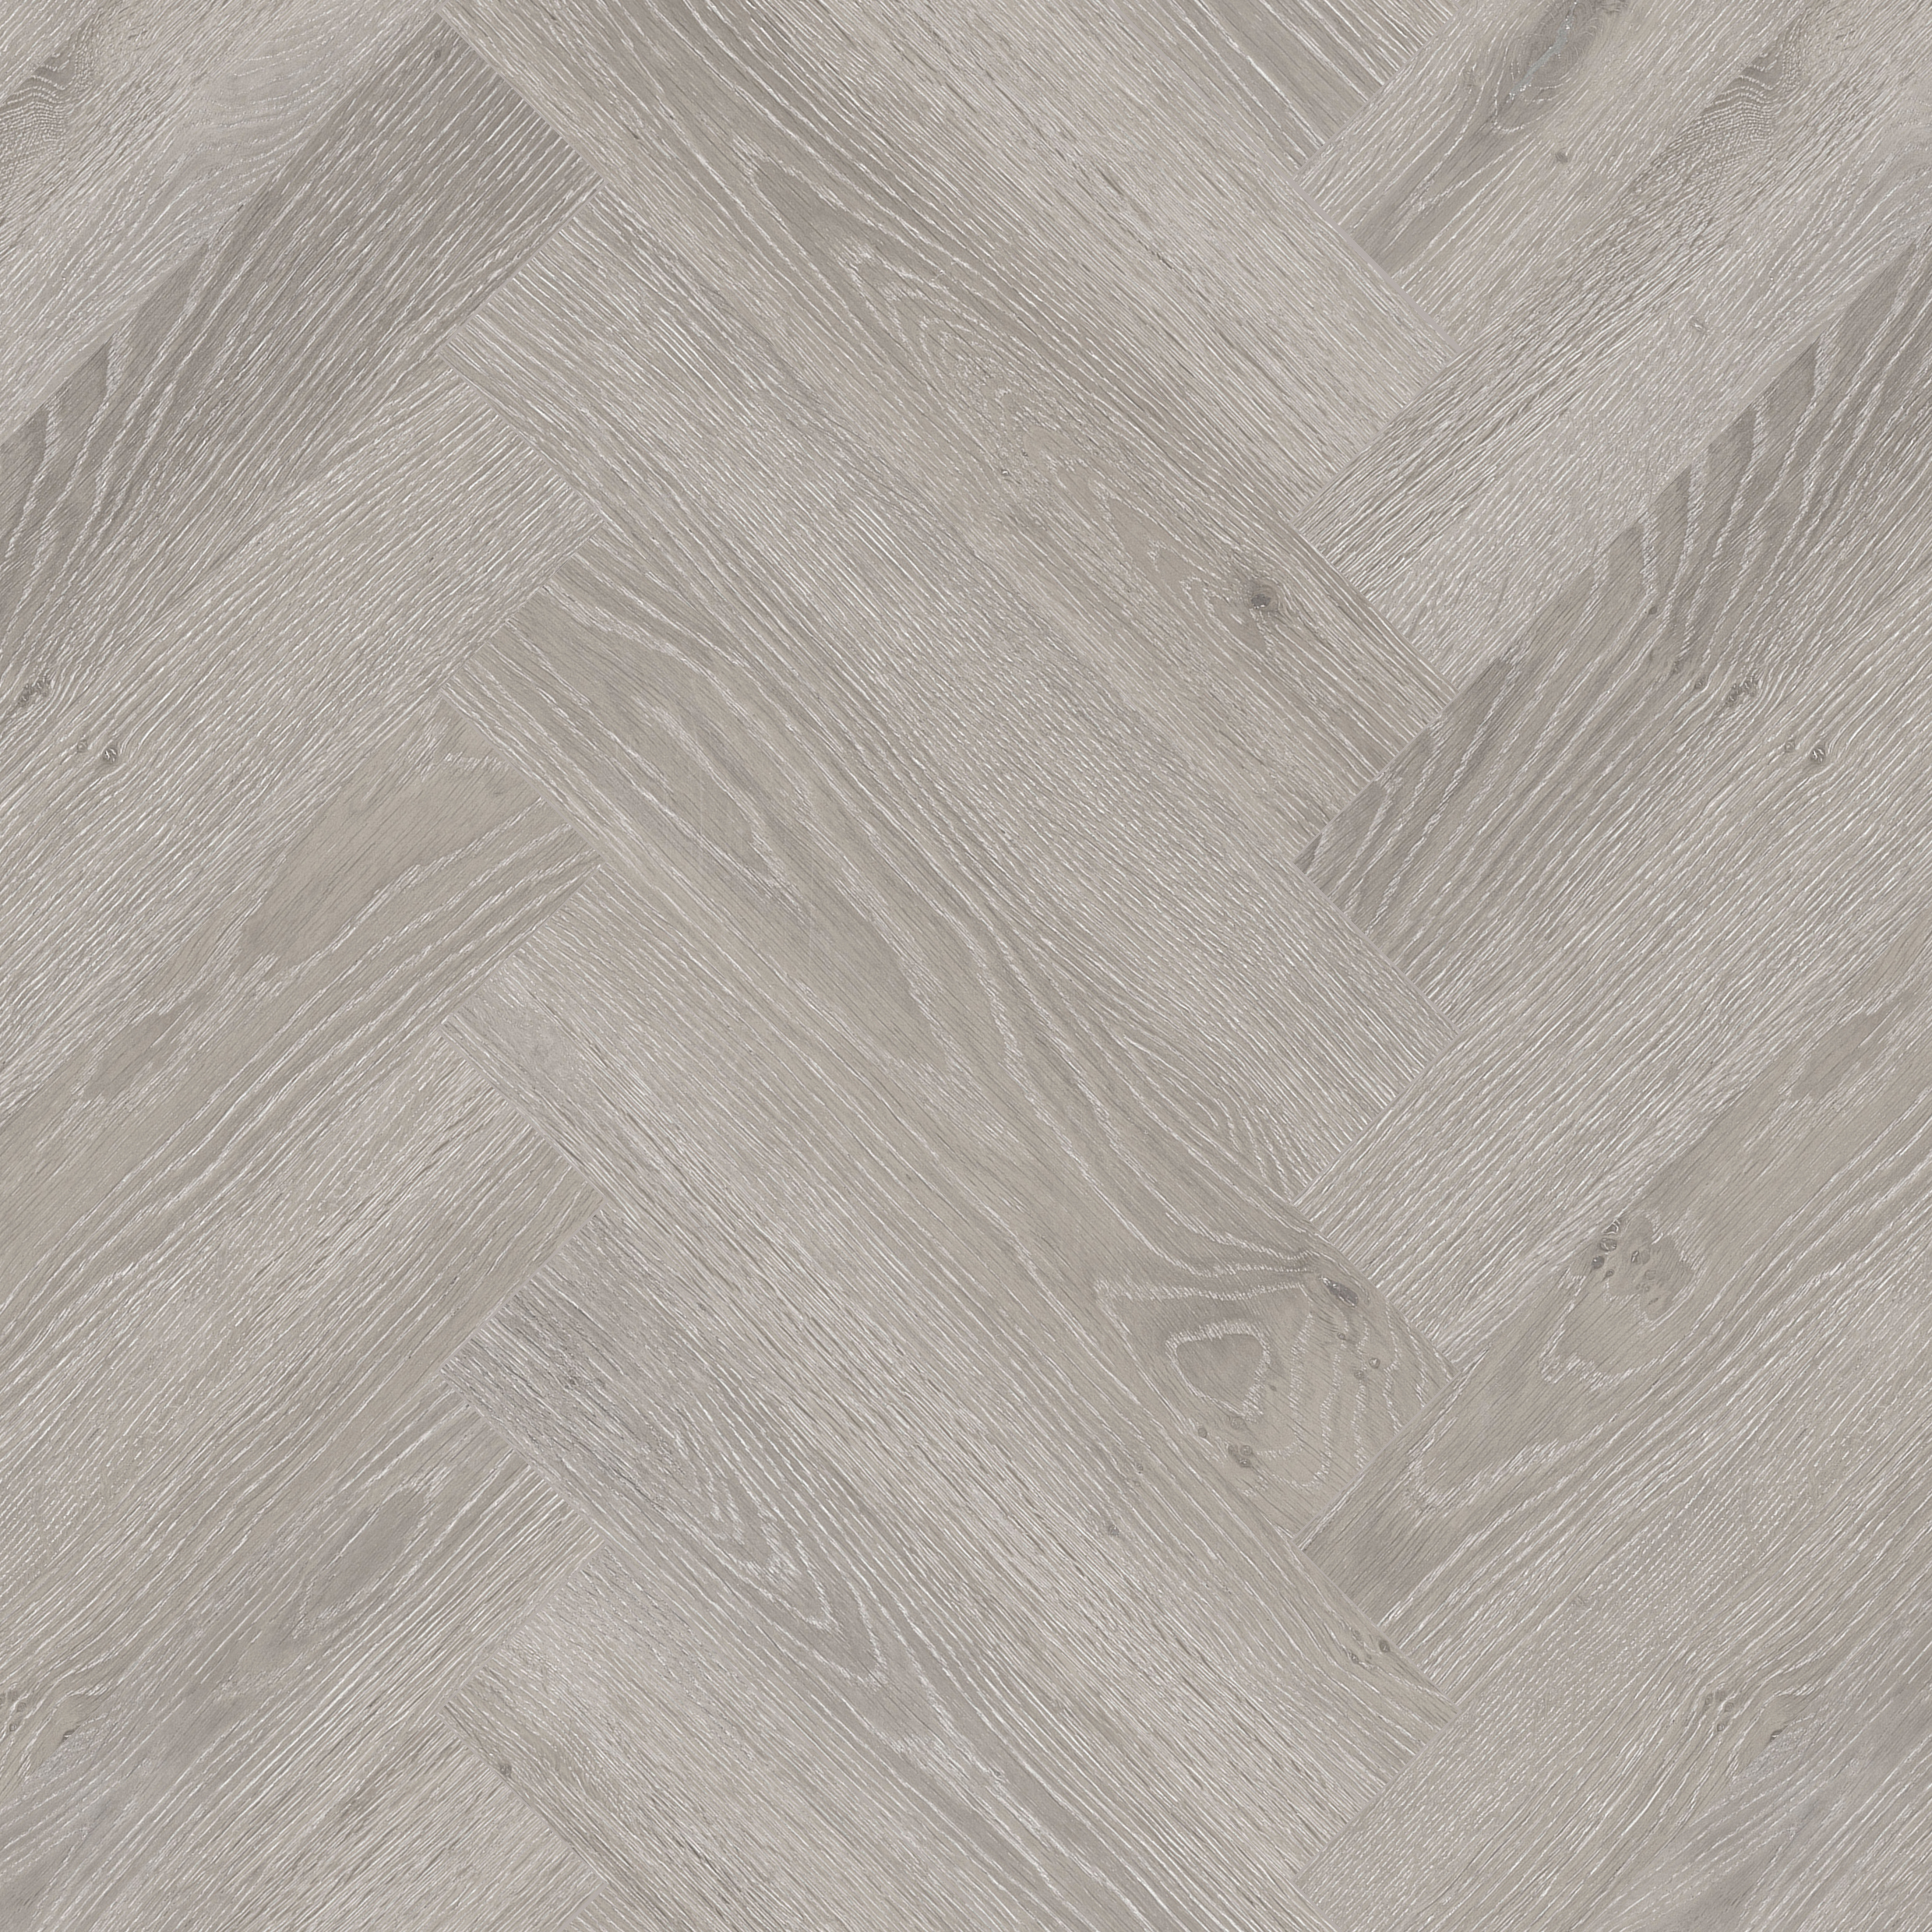 Image of Ludlow Limed Light Oak Herringbone SPC Flooring with Integrated Underlay - 2.22m2